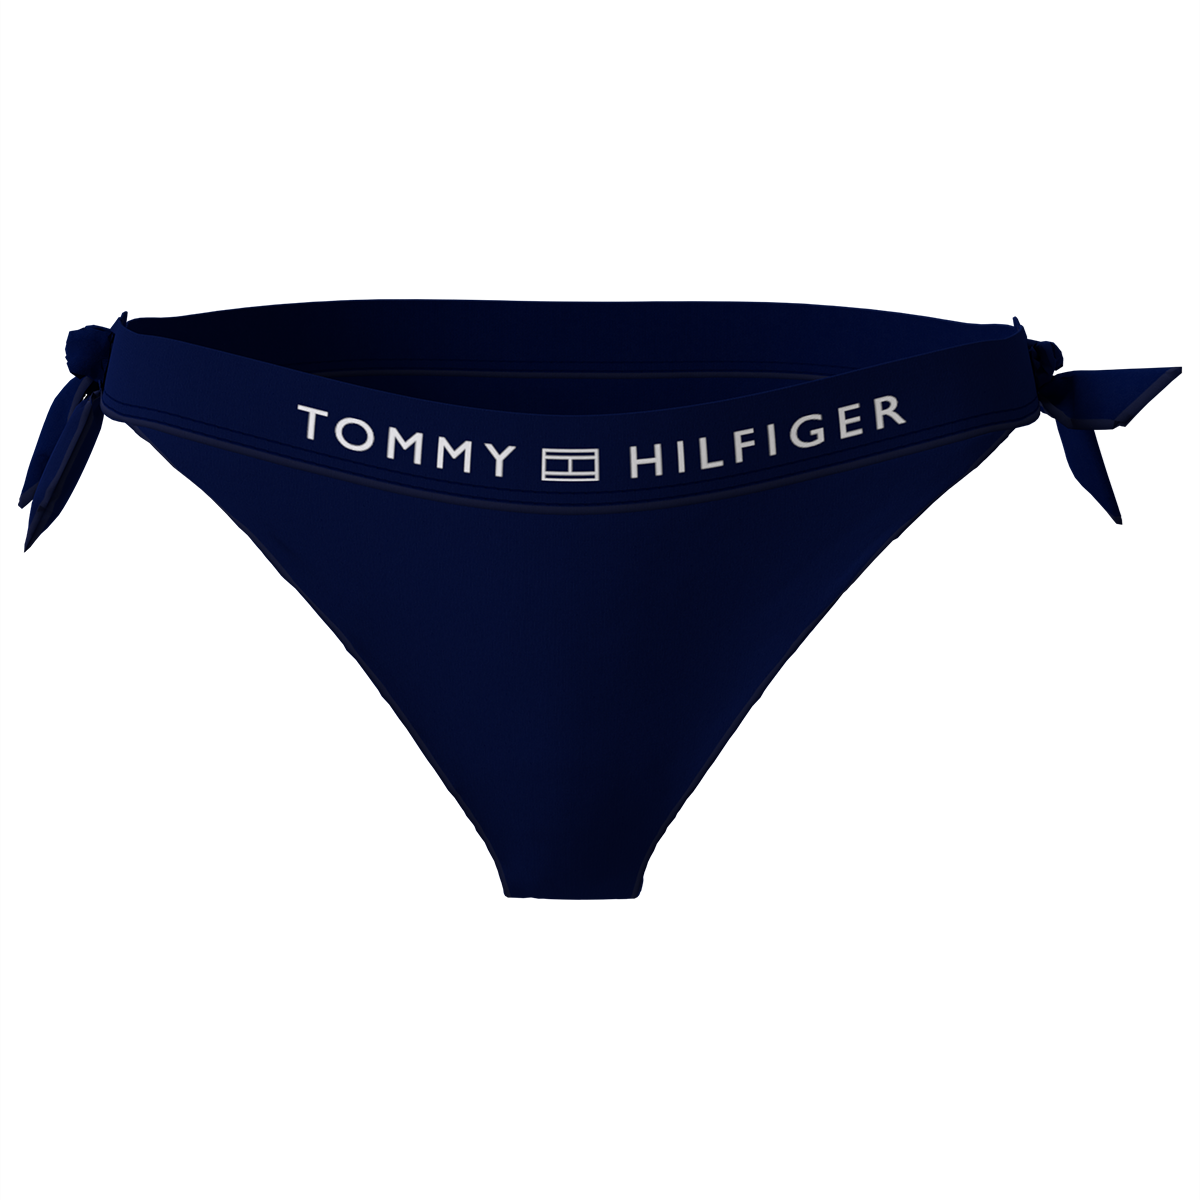 Tommy Hilfiger Lingeri Bikini Tai trusse, Farve: Sort, Størrelse: XL, Dame